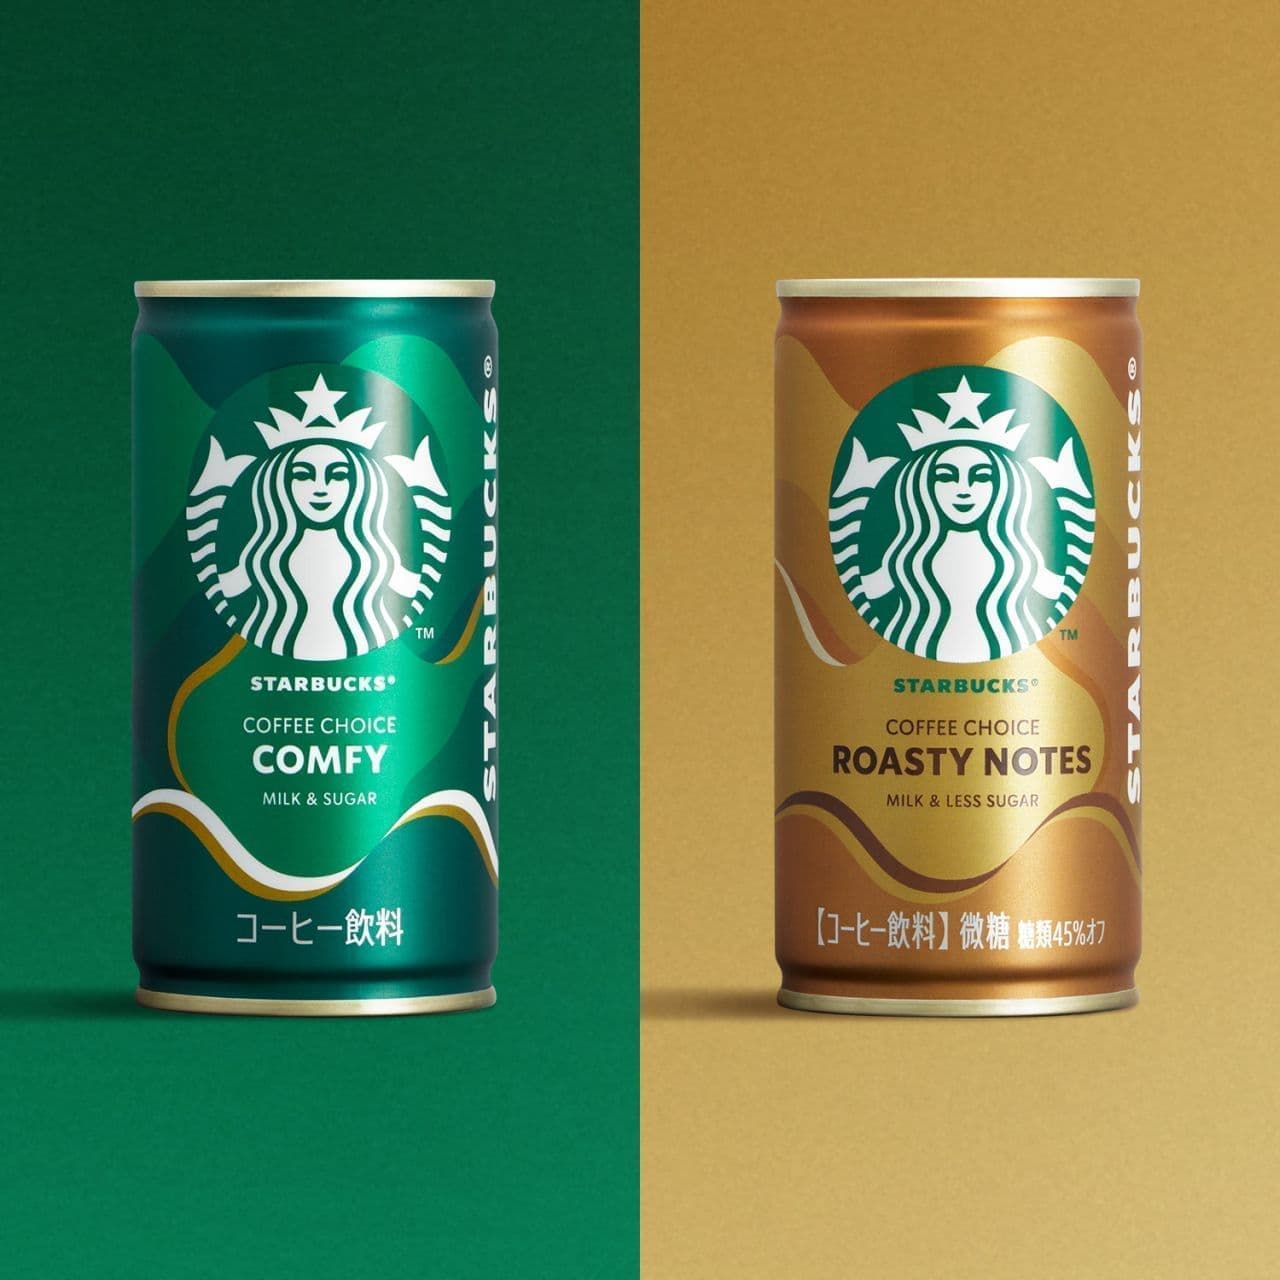 7-ELEVEN & i Group "Starbucks COFFEE CHOICE Comfy" and "Starbucks COFFEE CHOICE Roast Nuts".